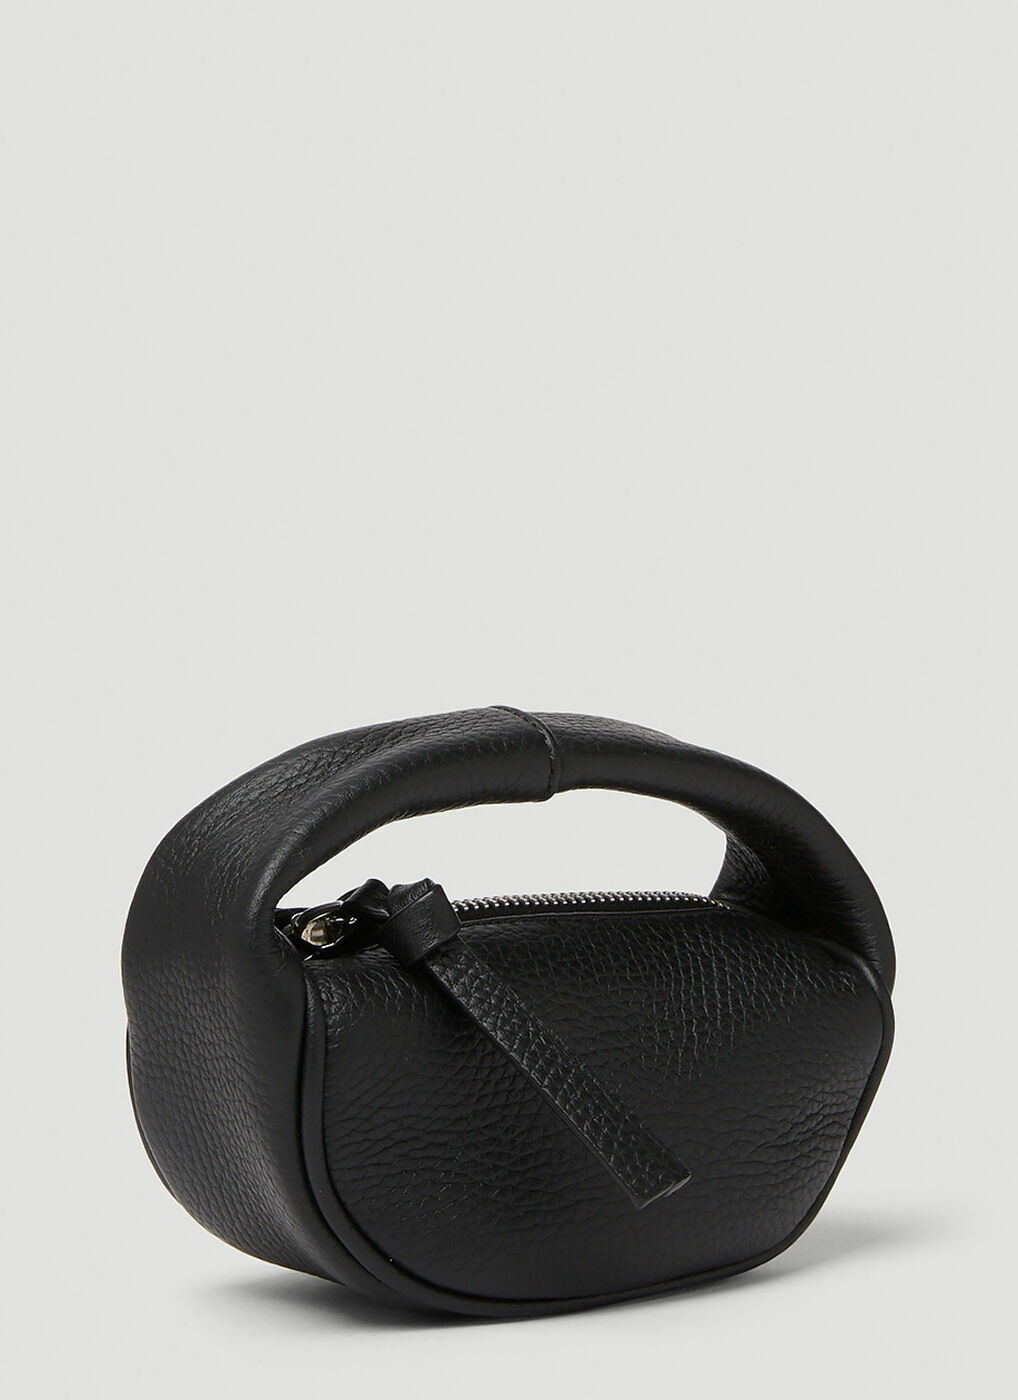 Cush Micro Handbag in Black By Far